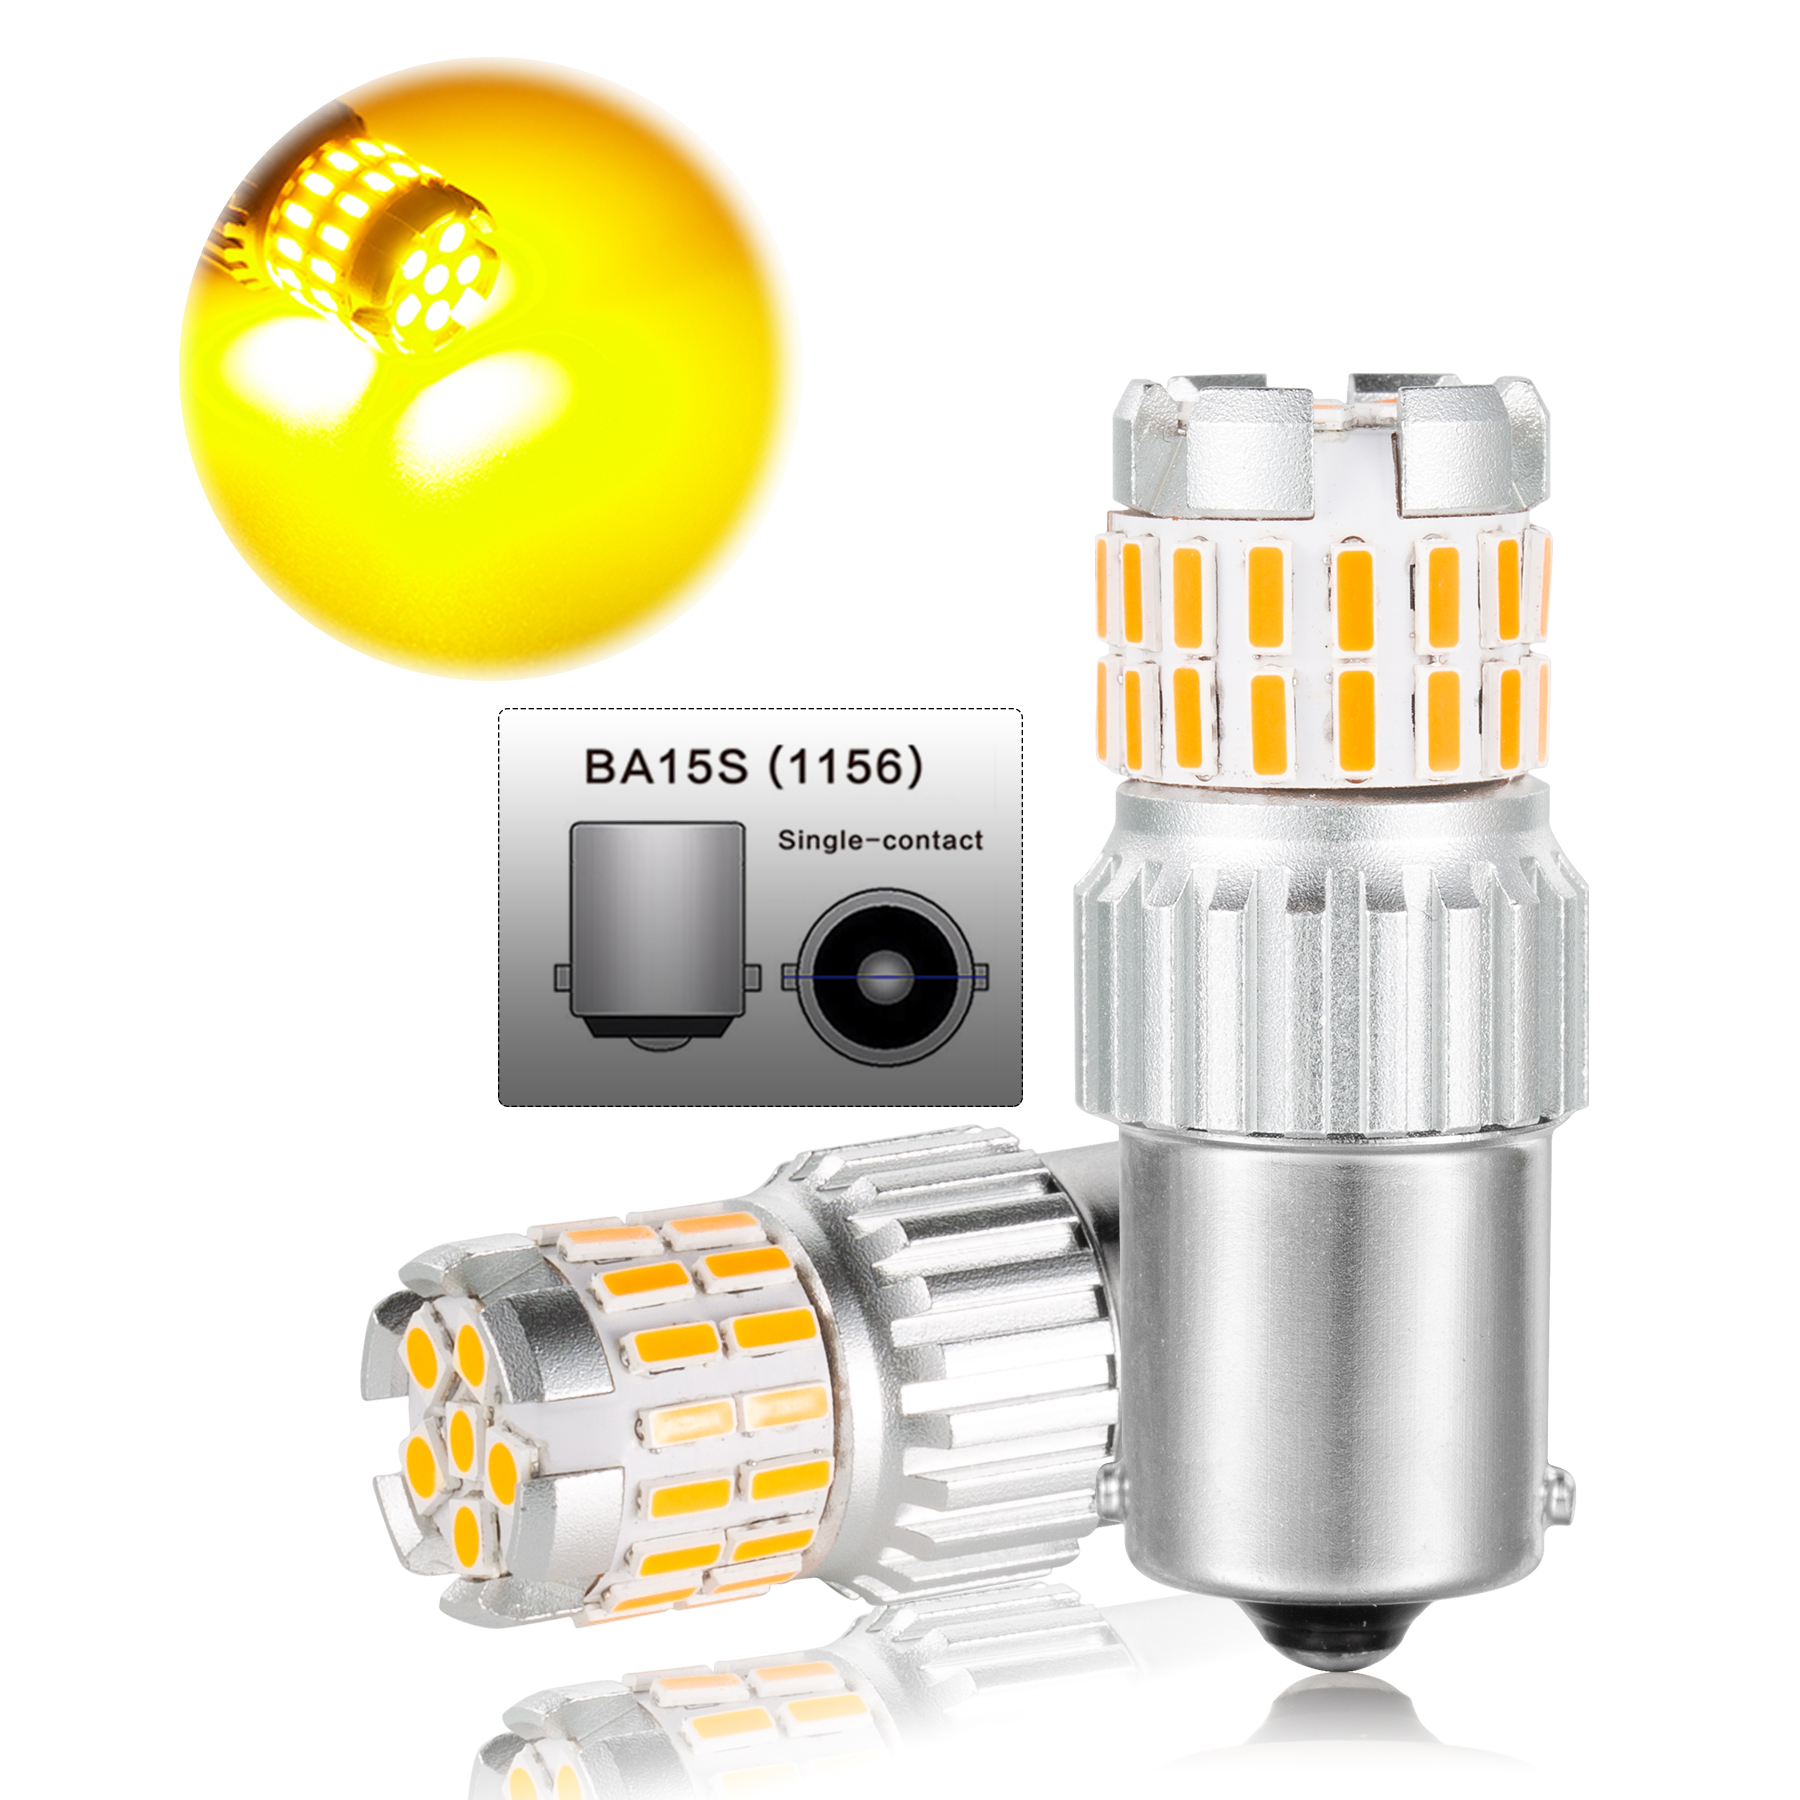 2pcs Fast Heat Disspation Aluminum LED Bulb for Drviaion 1156/1157Canbus Light Yellow light_1156 bau15s py21w